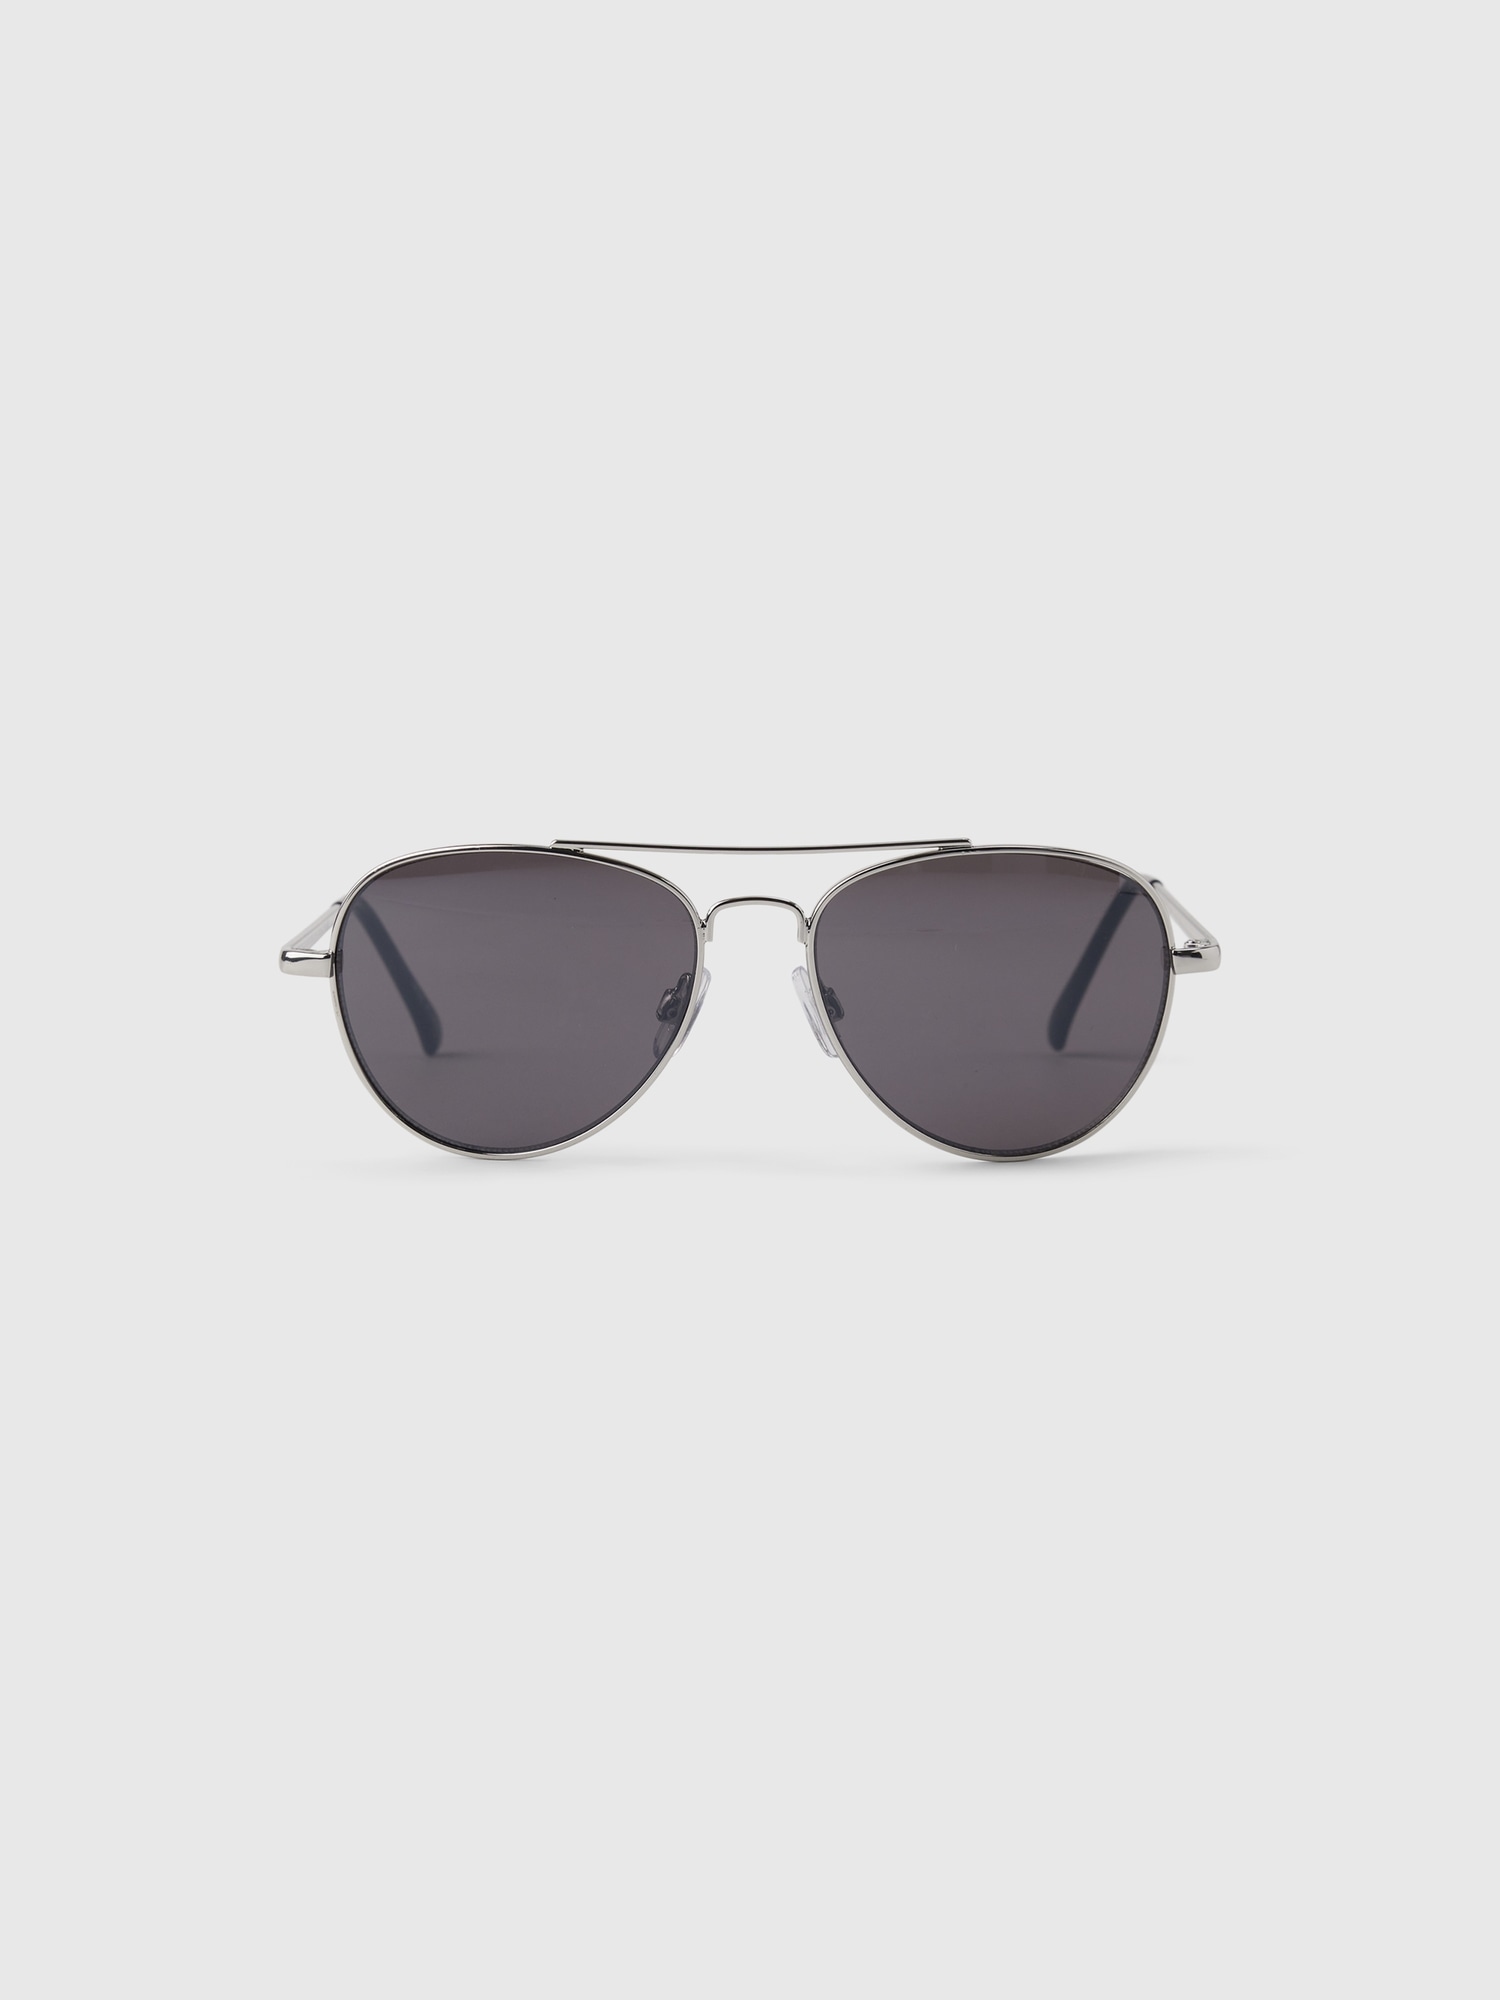 Kids Aviator Sunglasses | Gap